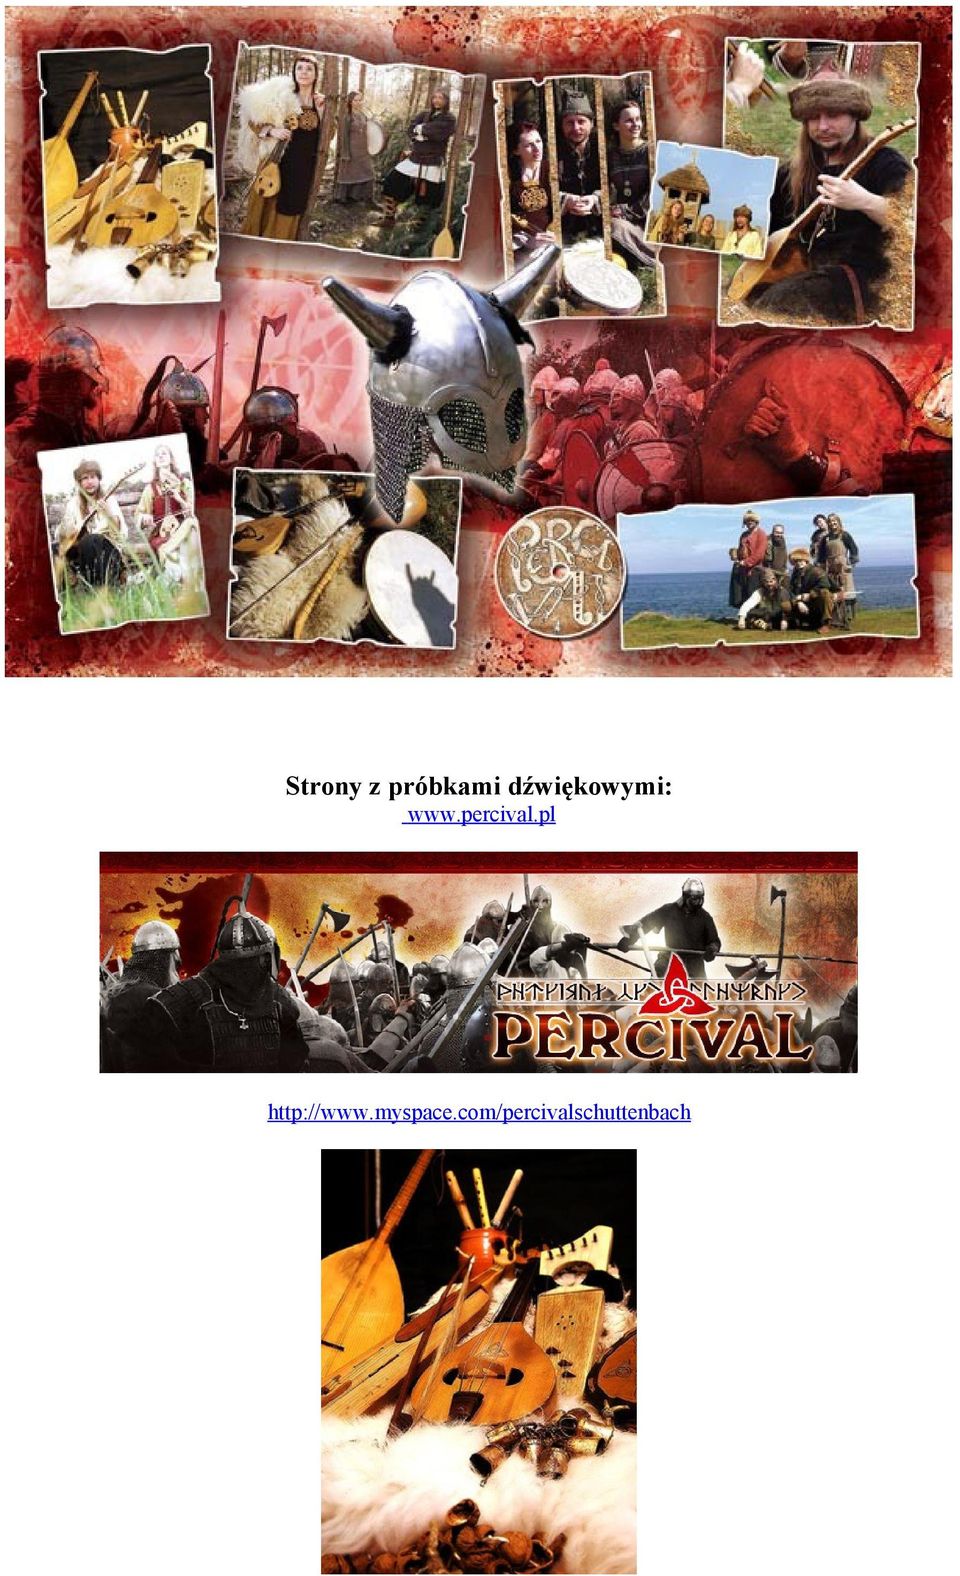 percival.pl http://www.